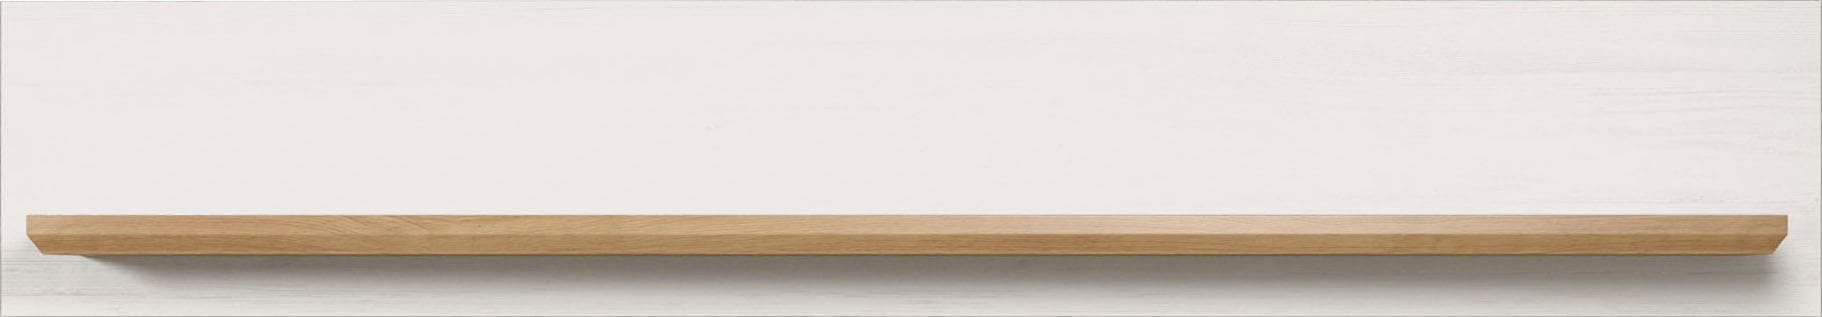 Home affaire Wandboard »Nybro«, Breite 146 cm